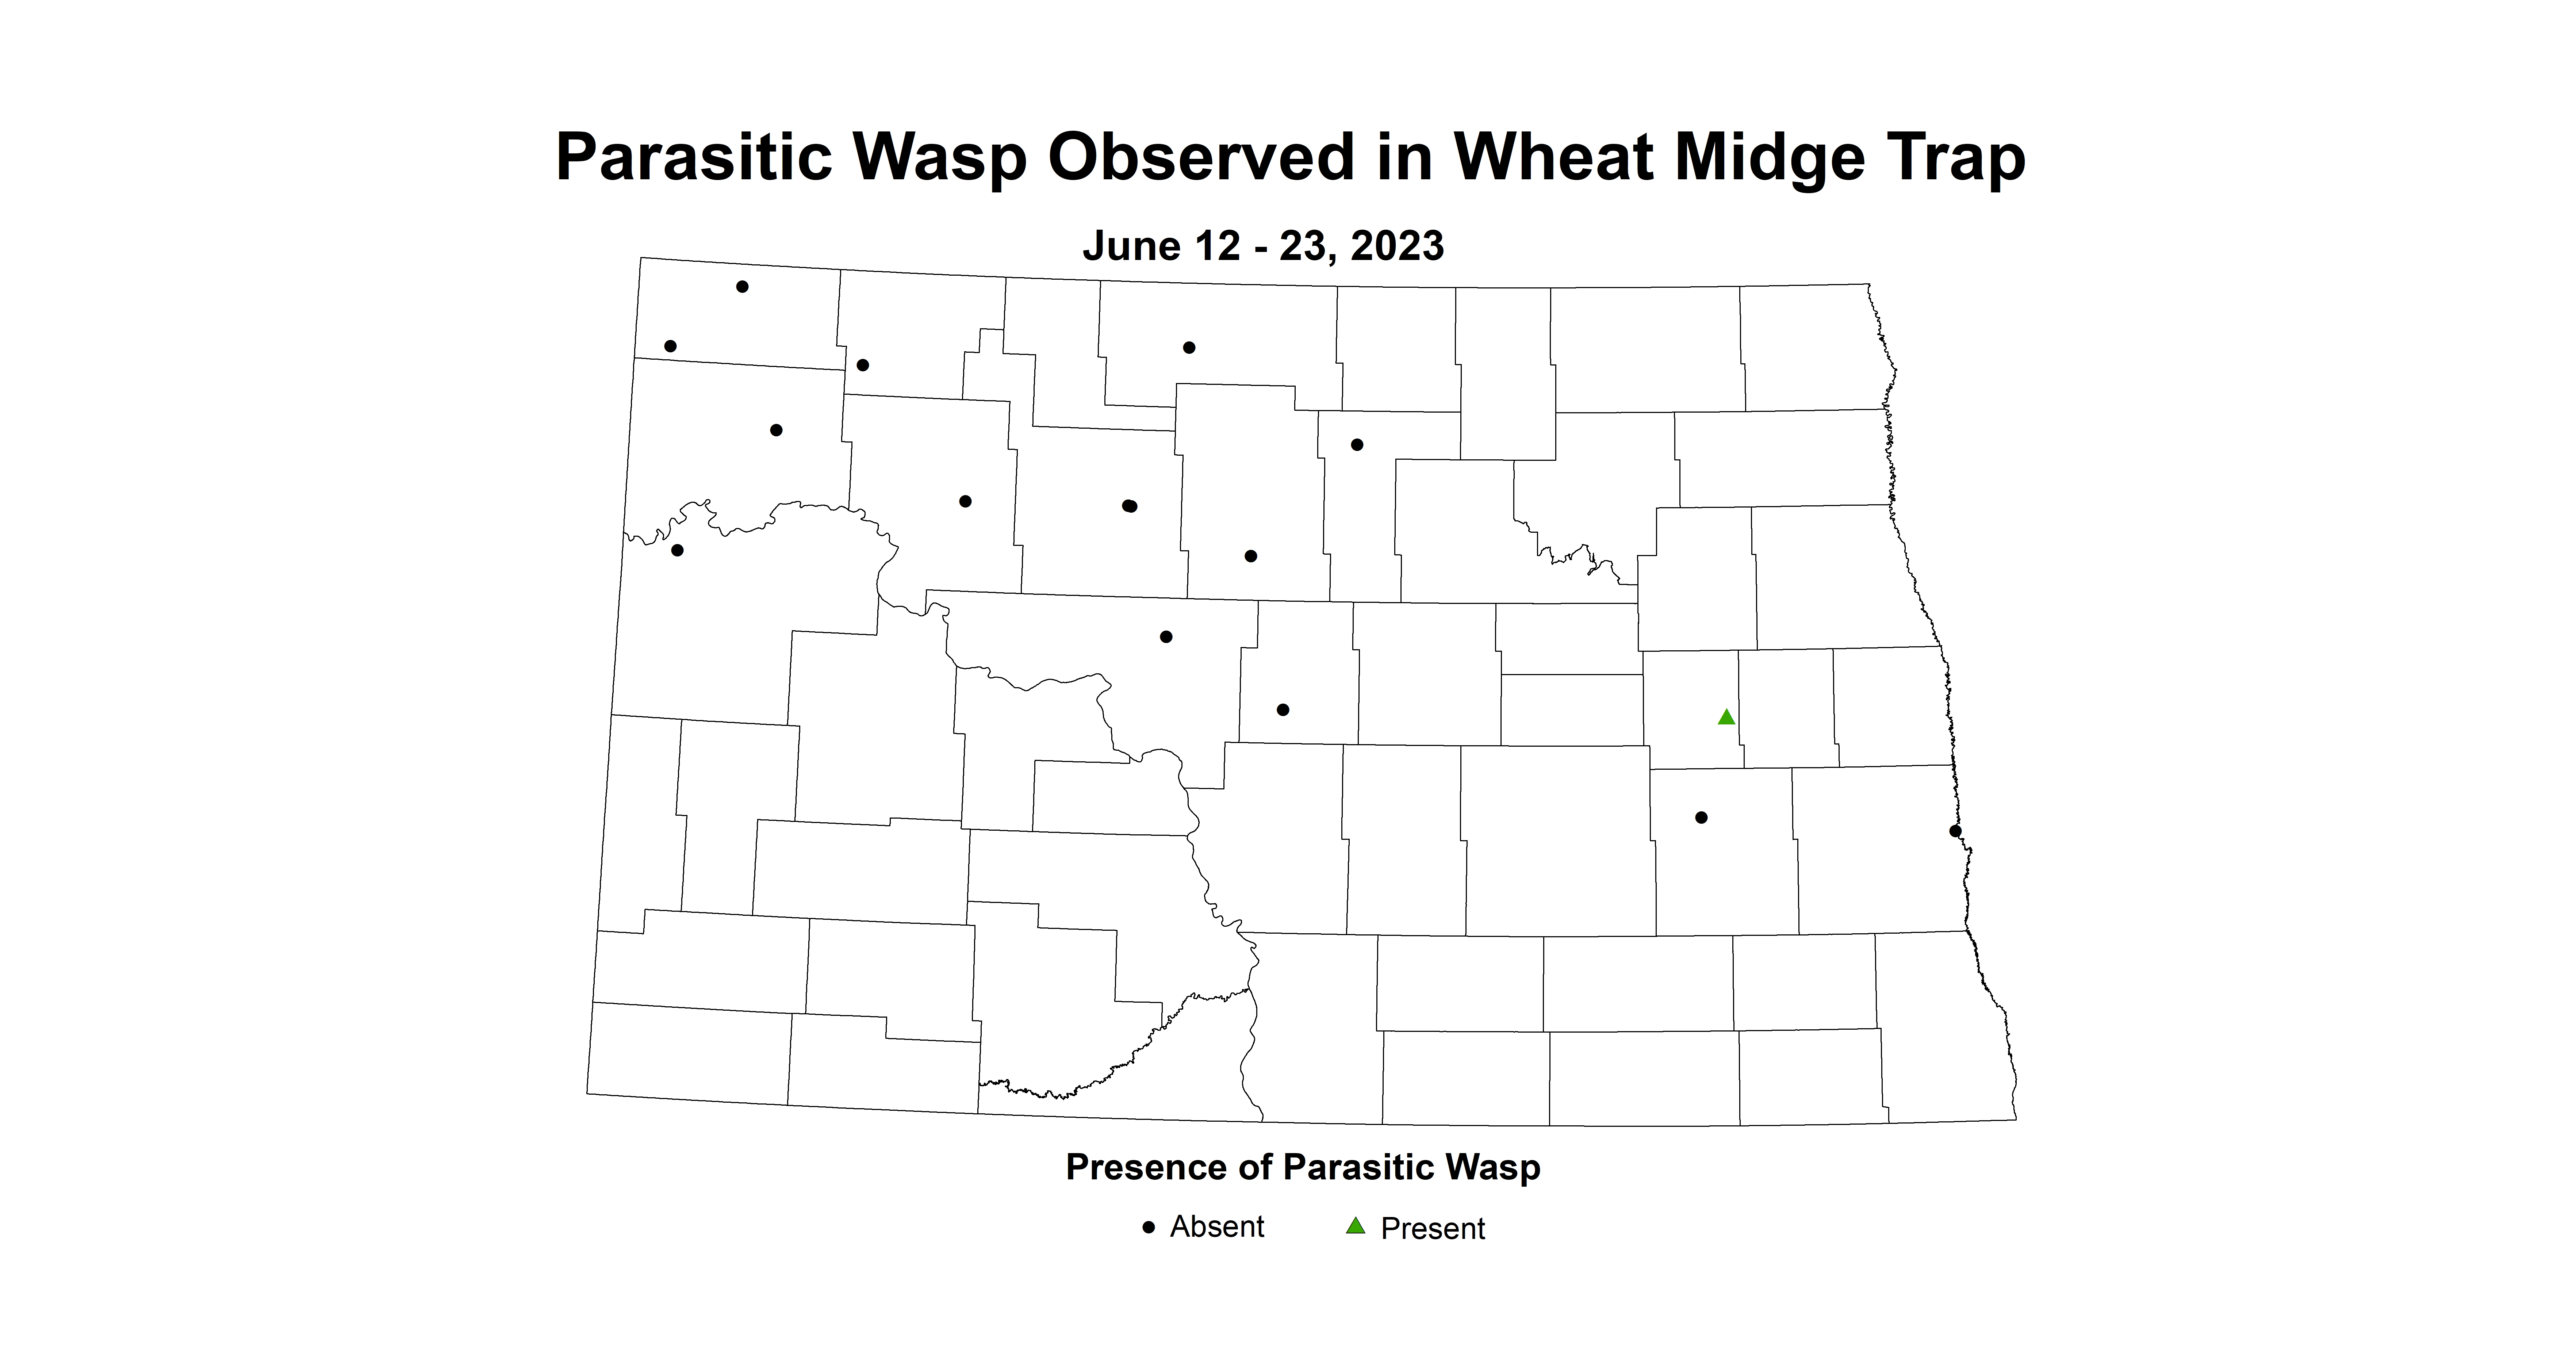 wheat midge trap parasitic wasp June 12-23 2023